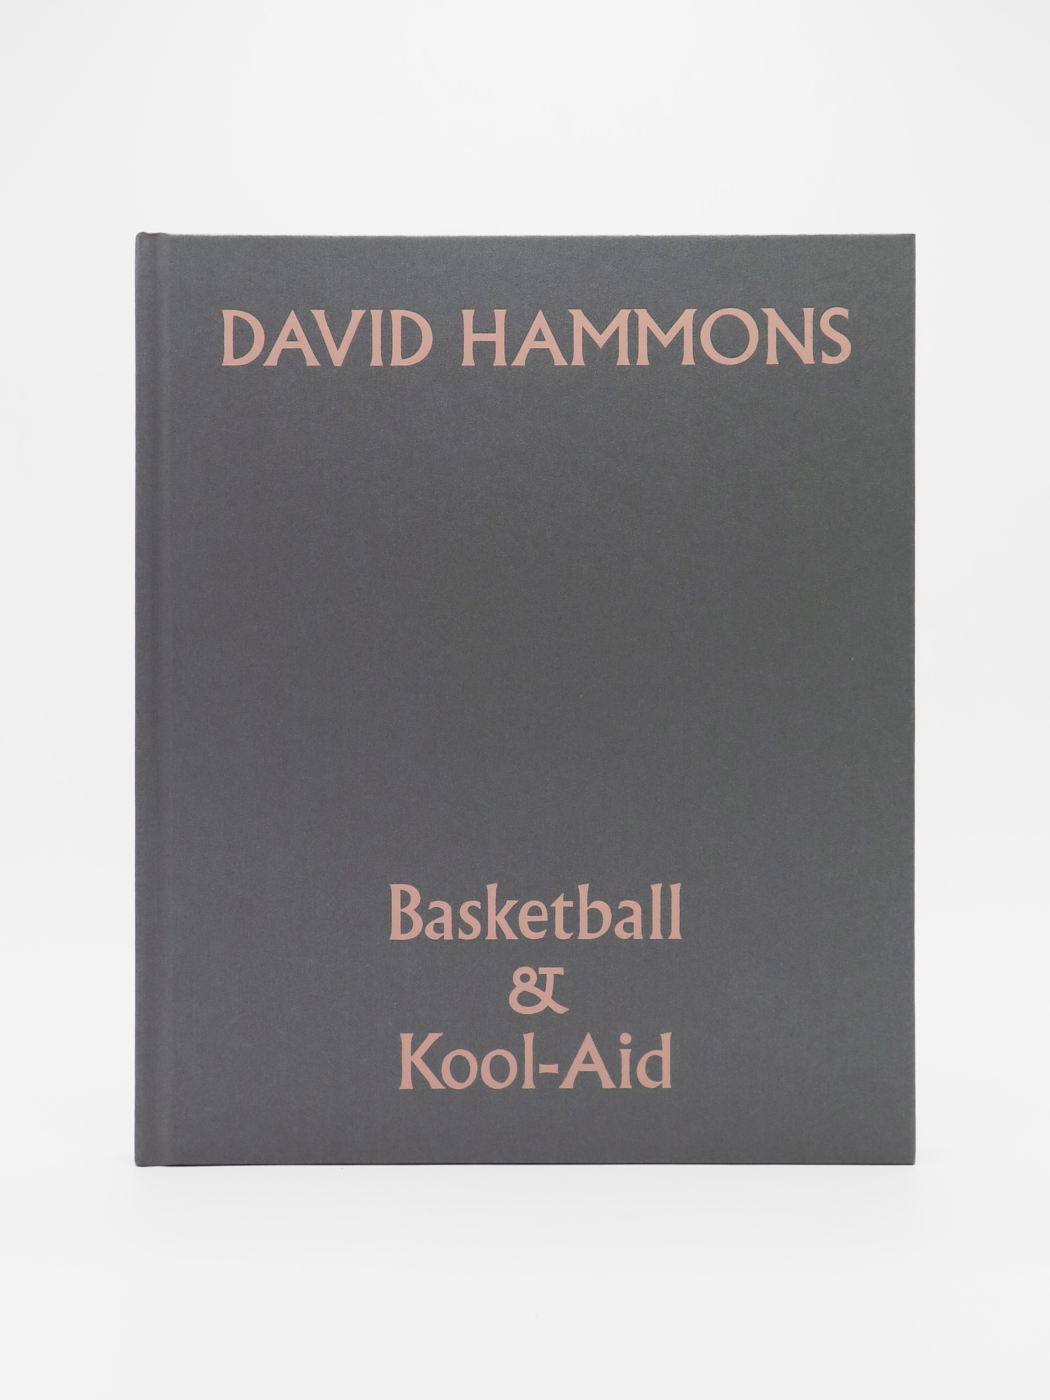 David Hammons, Basketball & Kool-Aid